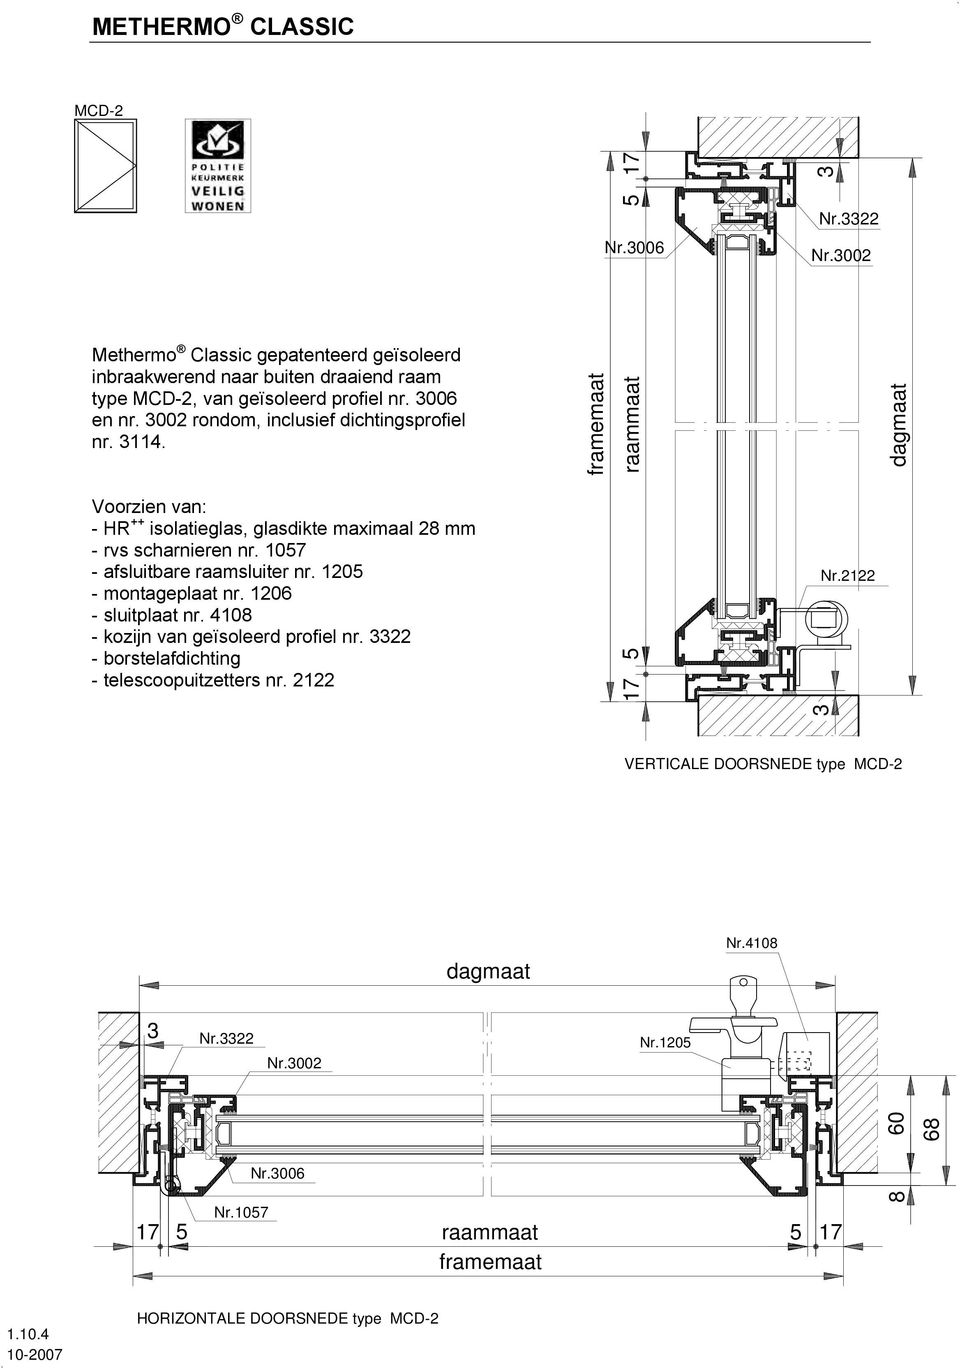 1057 - afsluitbare raamsluiter nr. 1205 - montageplaat nr. 1206 - sluitplaat nr. 4108 - kozijn van geïsoleerd profiel nr.